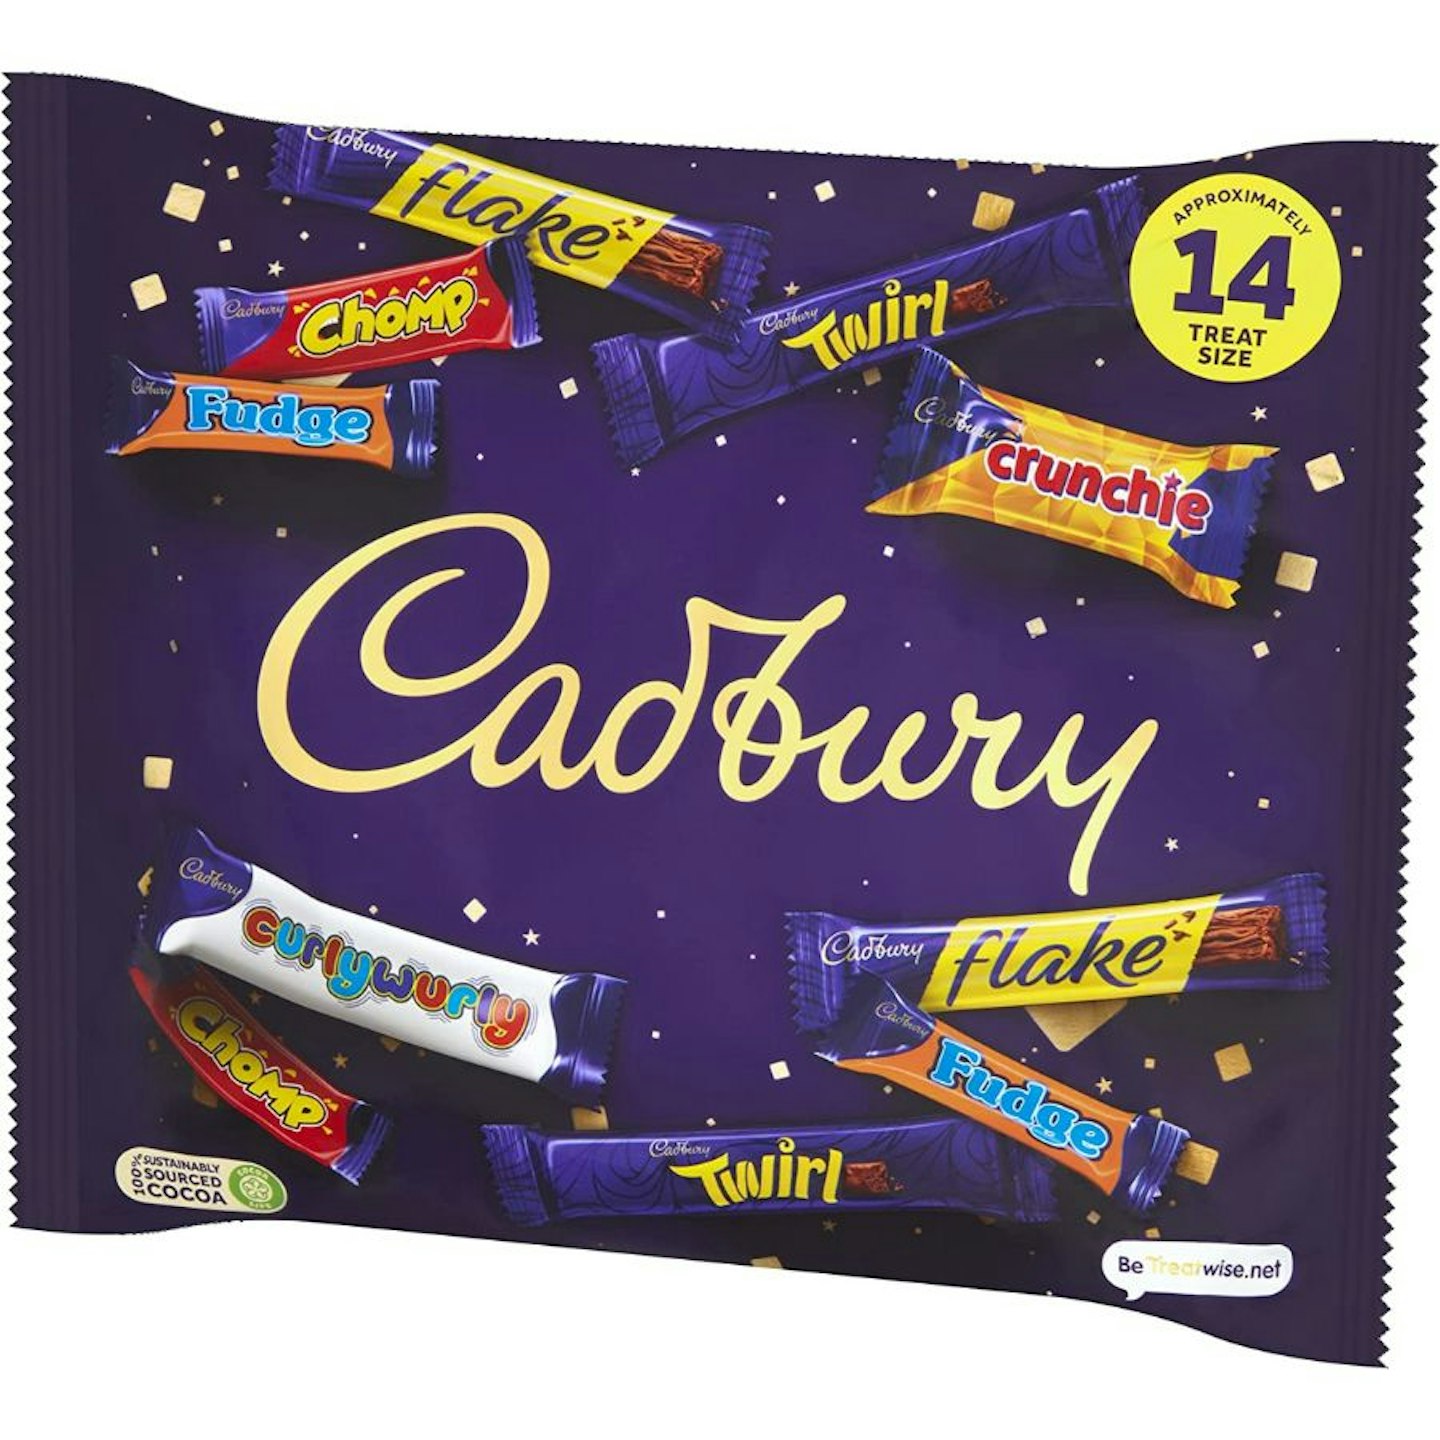 Cadbury Family Heroes Treat size Chocolate Bars Multipack